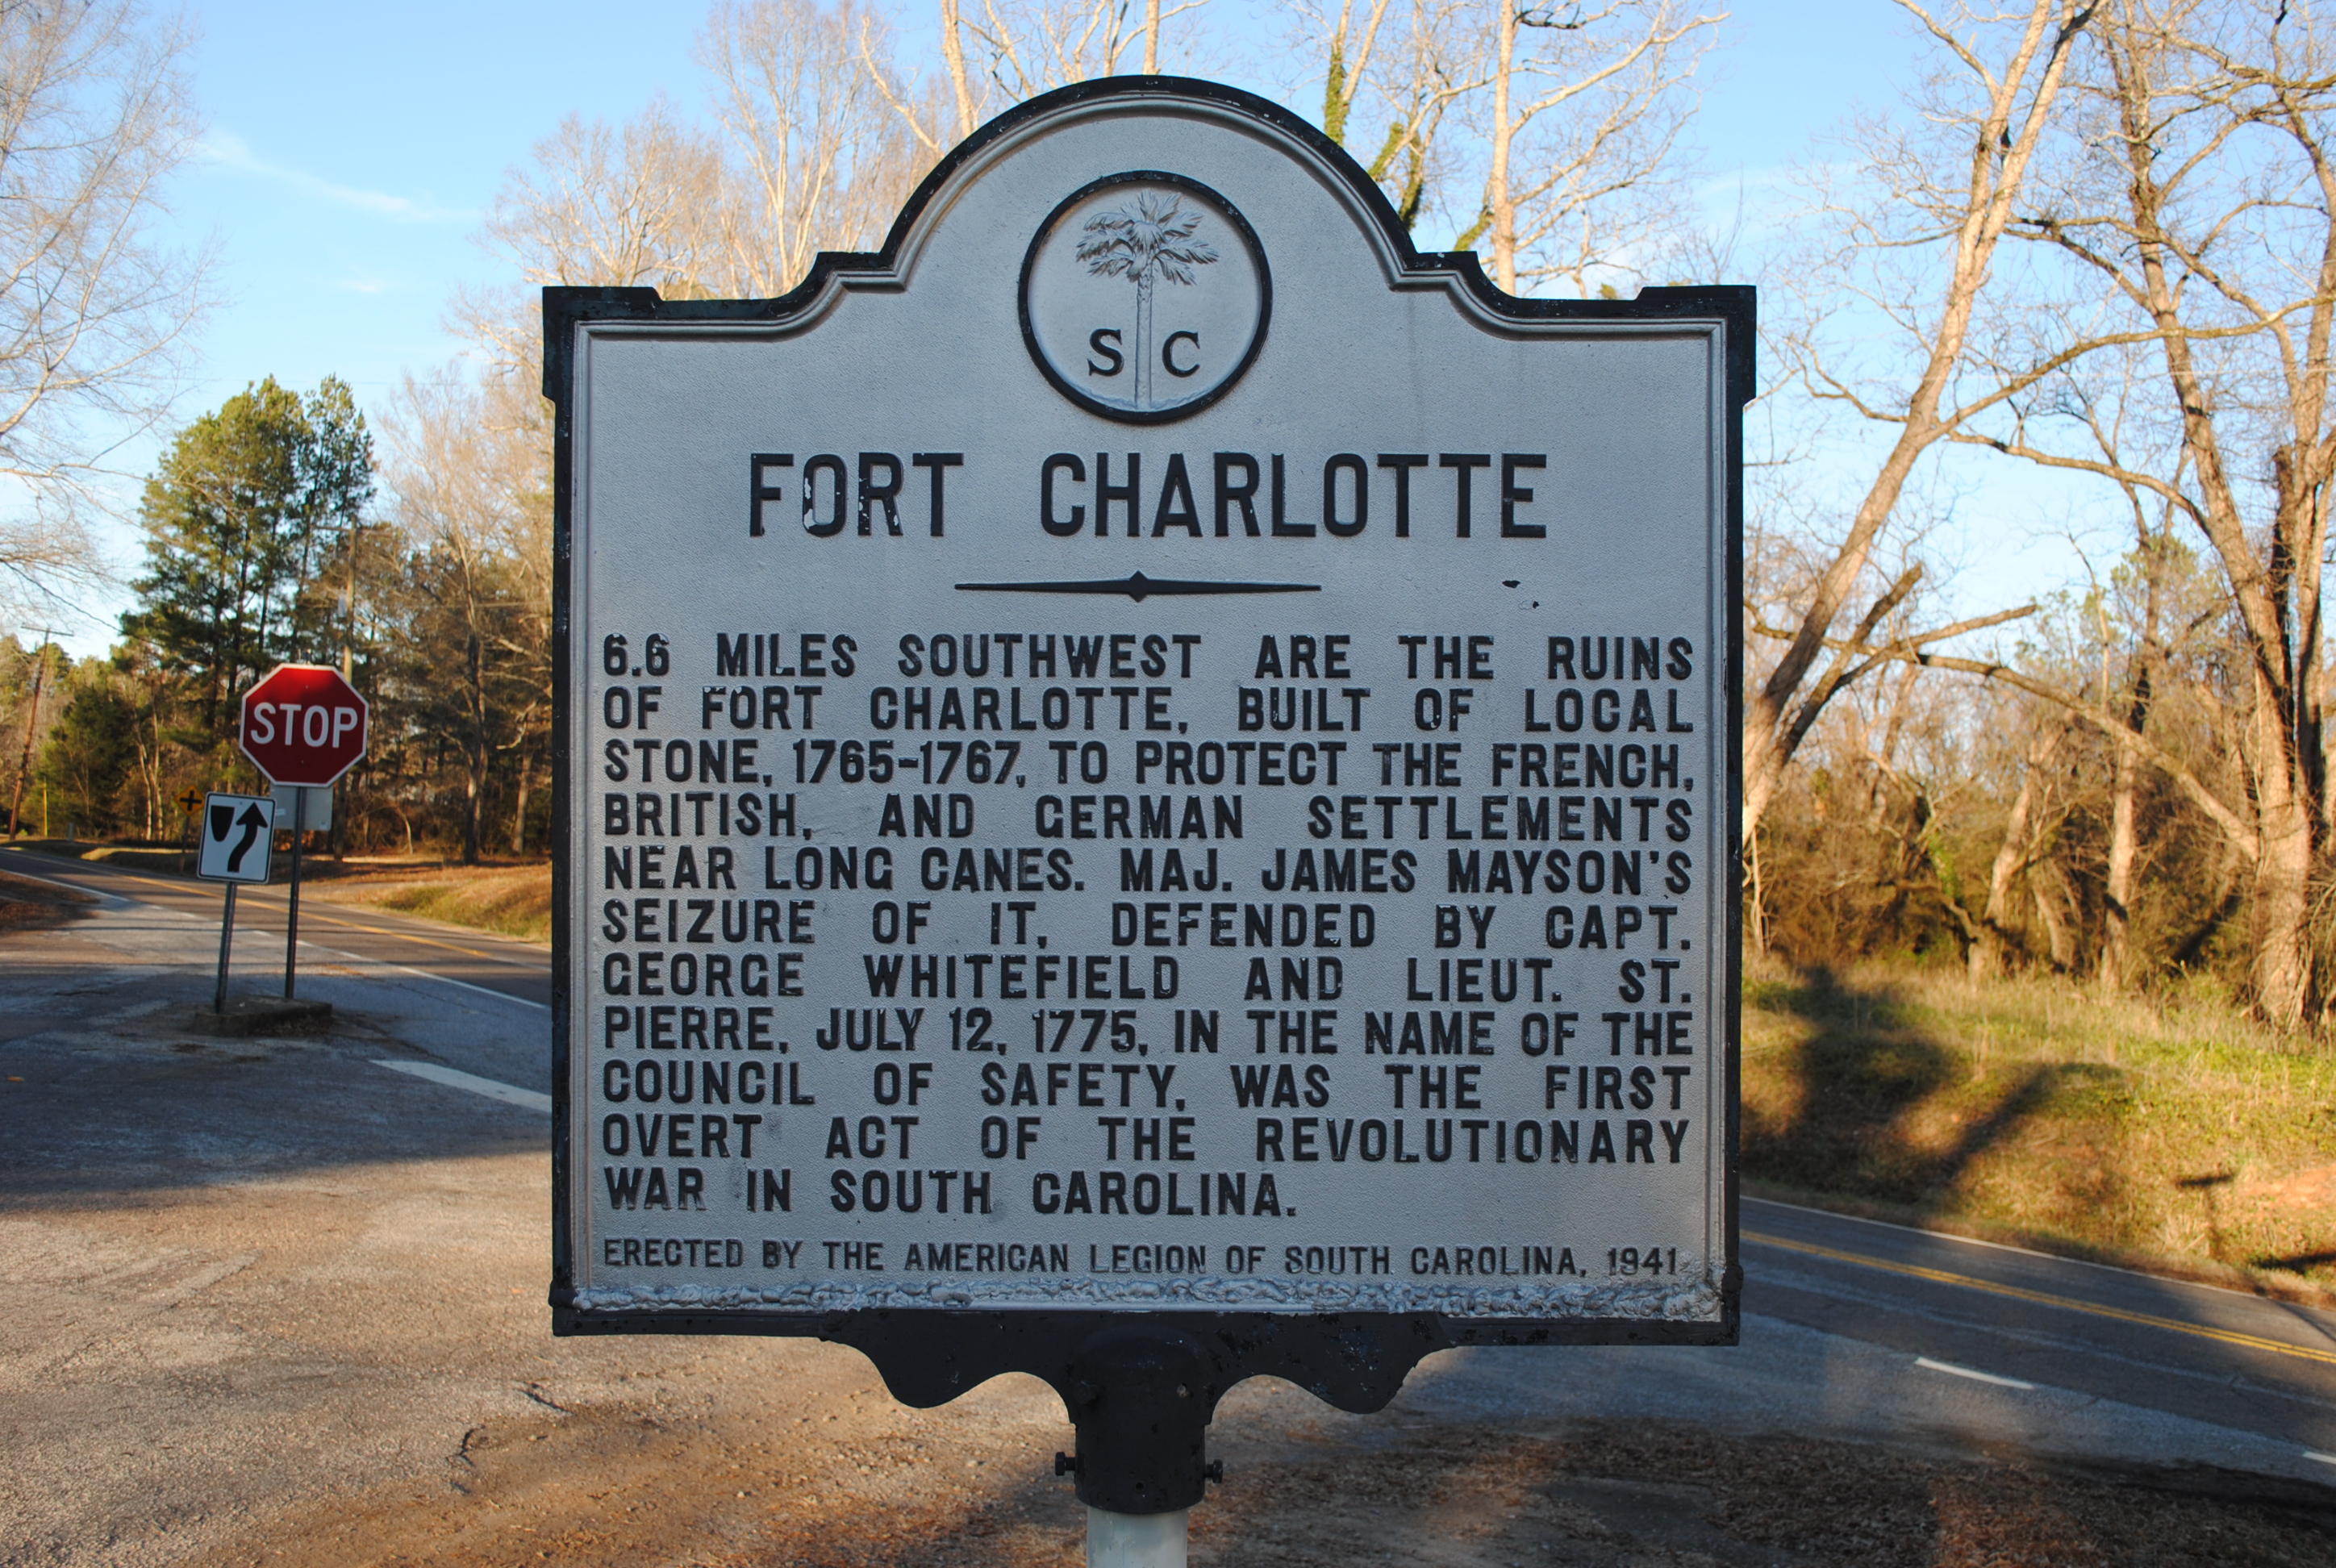 SC Historic Marker for Fort Charlotte at Mount Carmel, S.C.